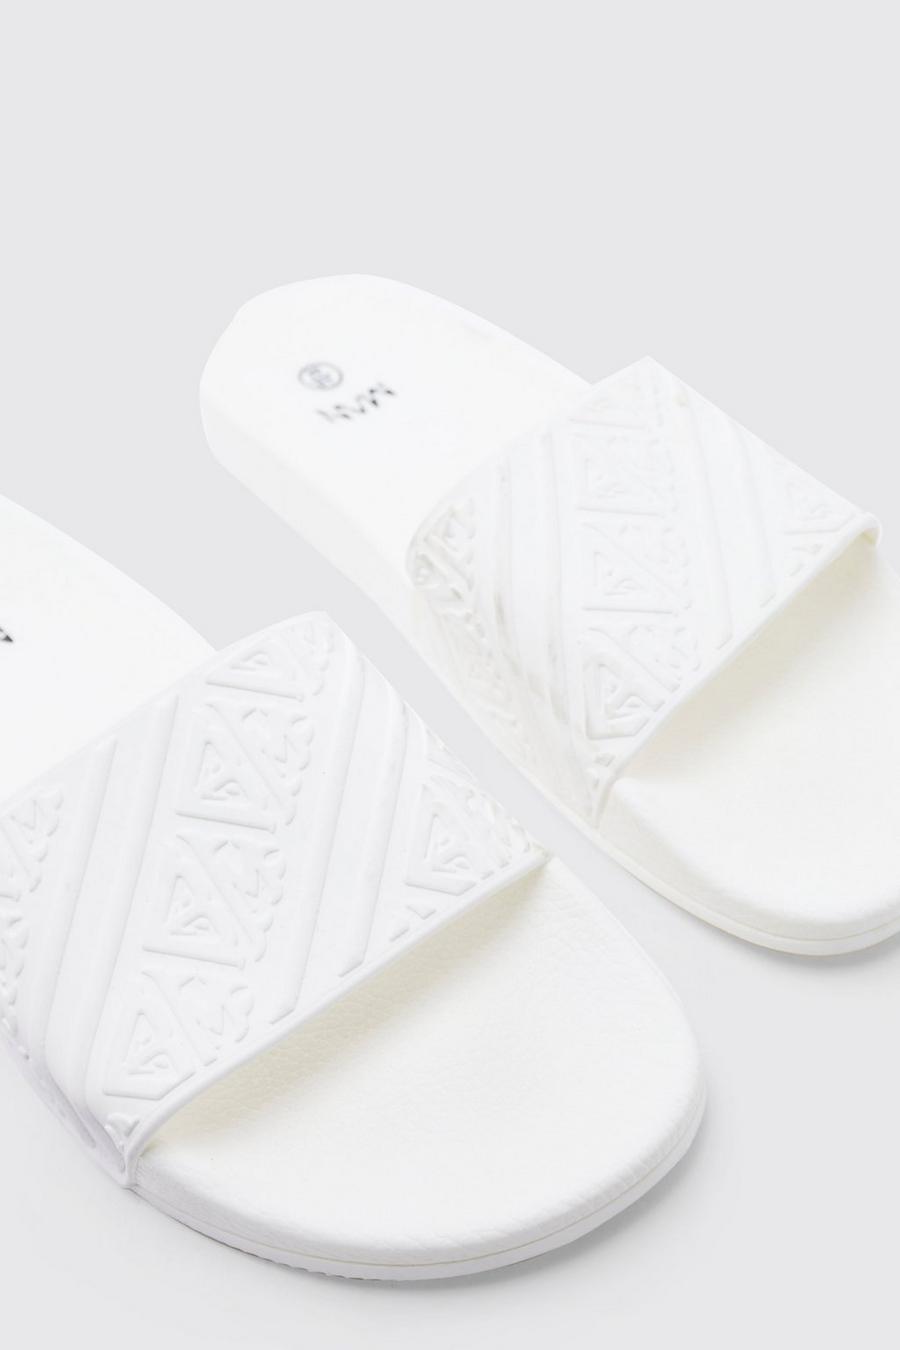 Sandalias con letras BM en relieve, White bianco